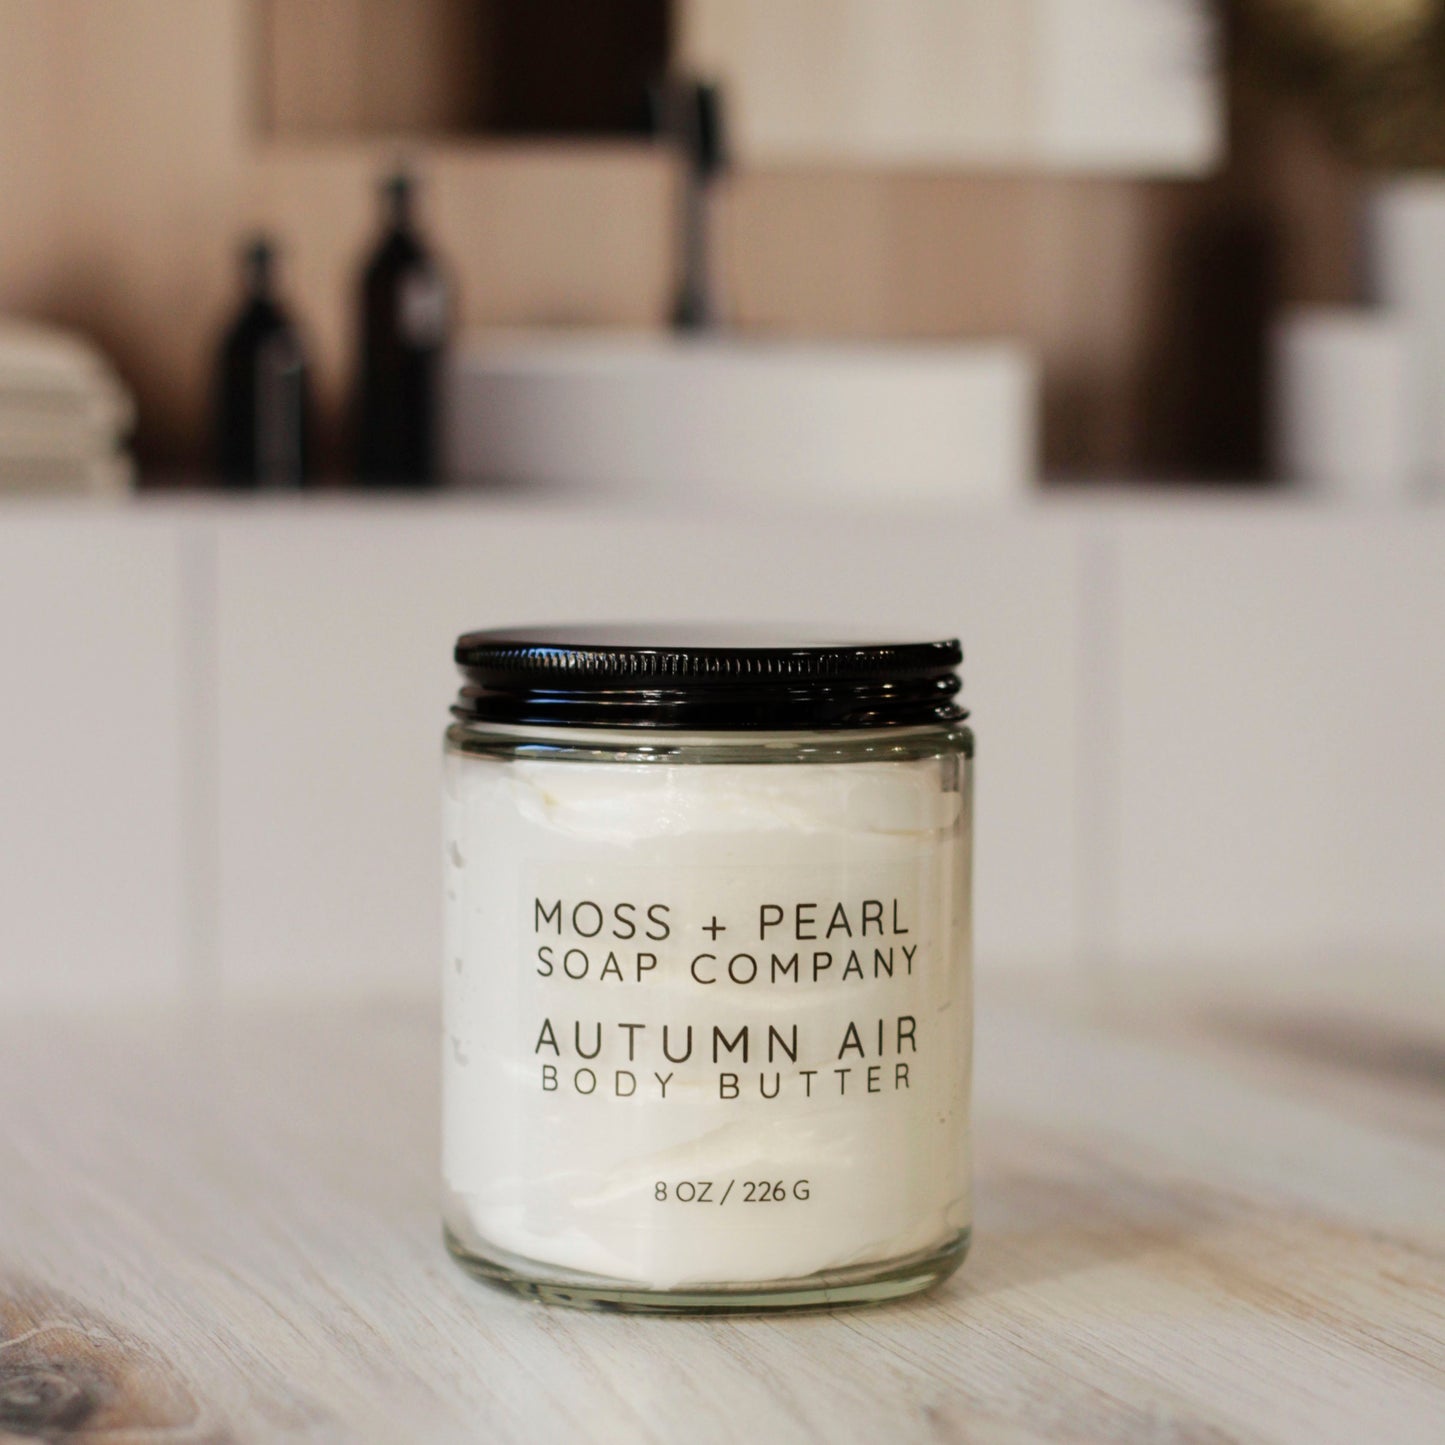 Rich Body Butter Moss + Pearl Soap Company